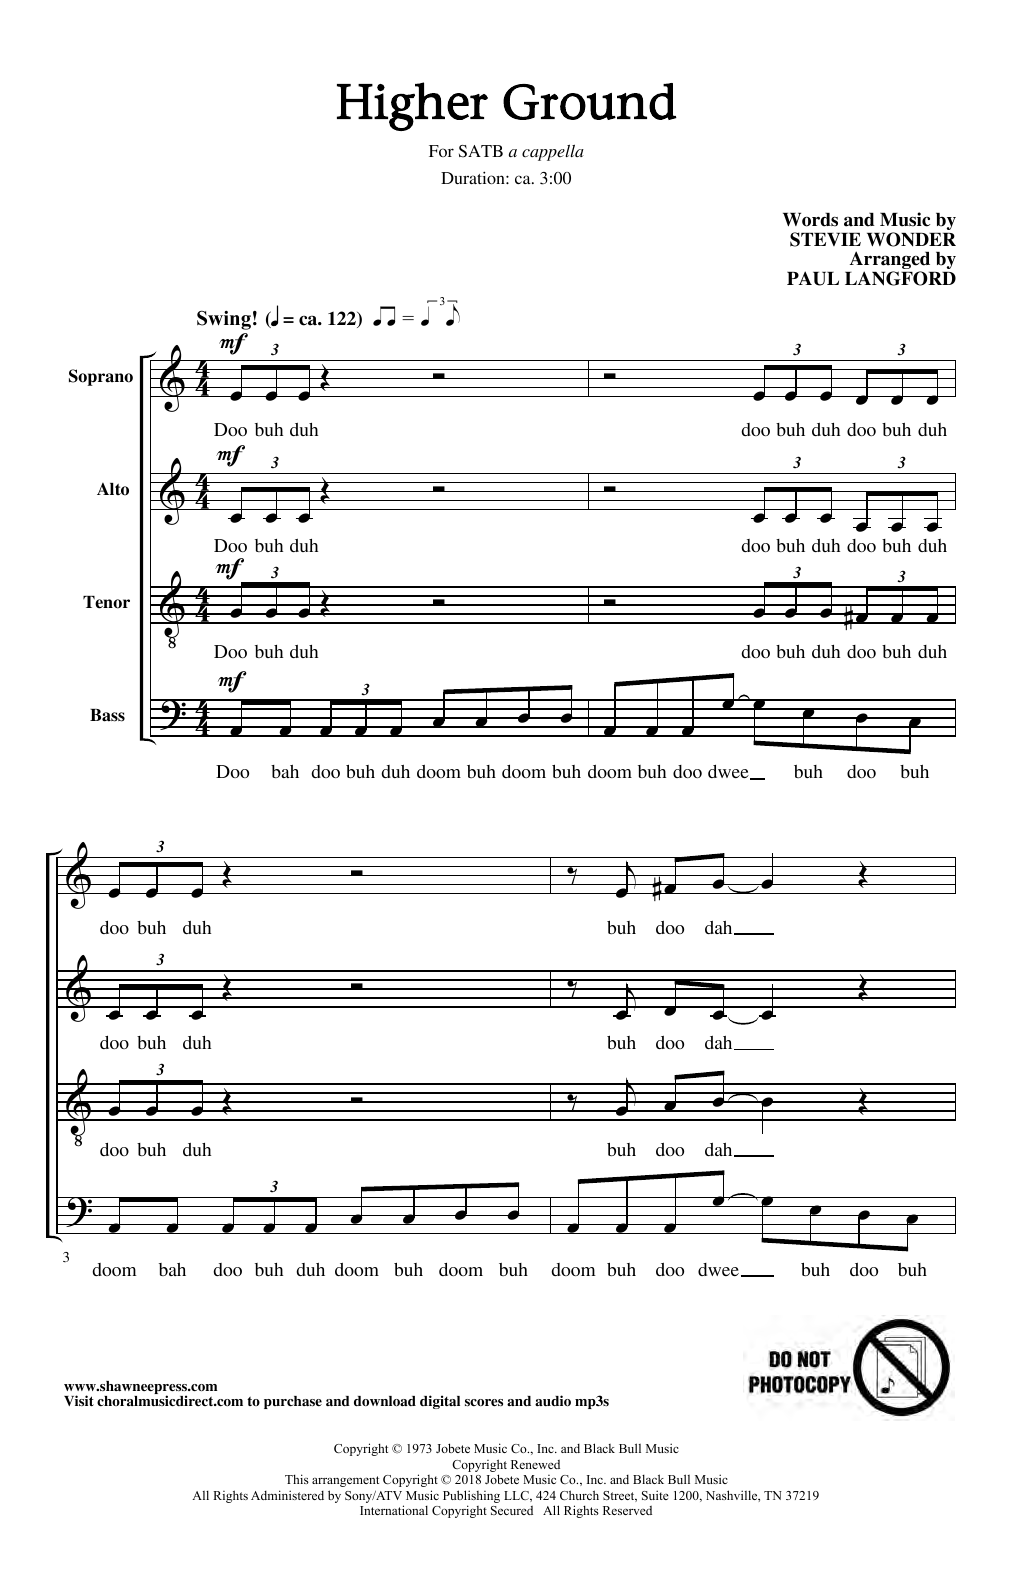 Stevie Wonder Higher Ground (arr. Paul Langford) sheet music notes and chords arranged for SATB Choir